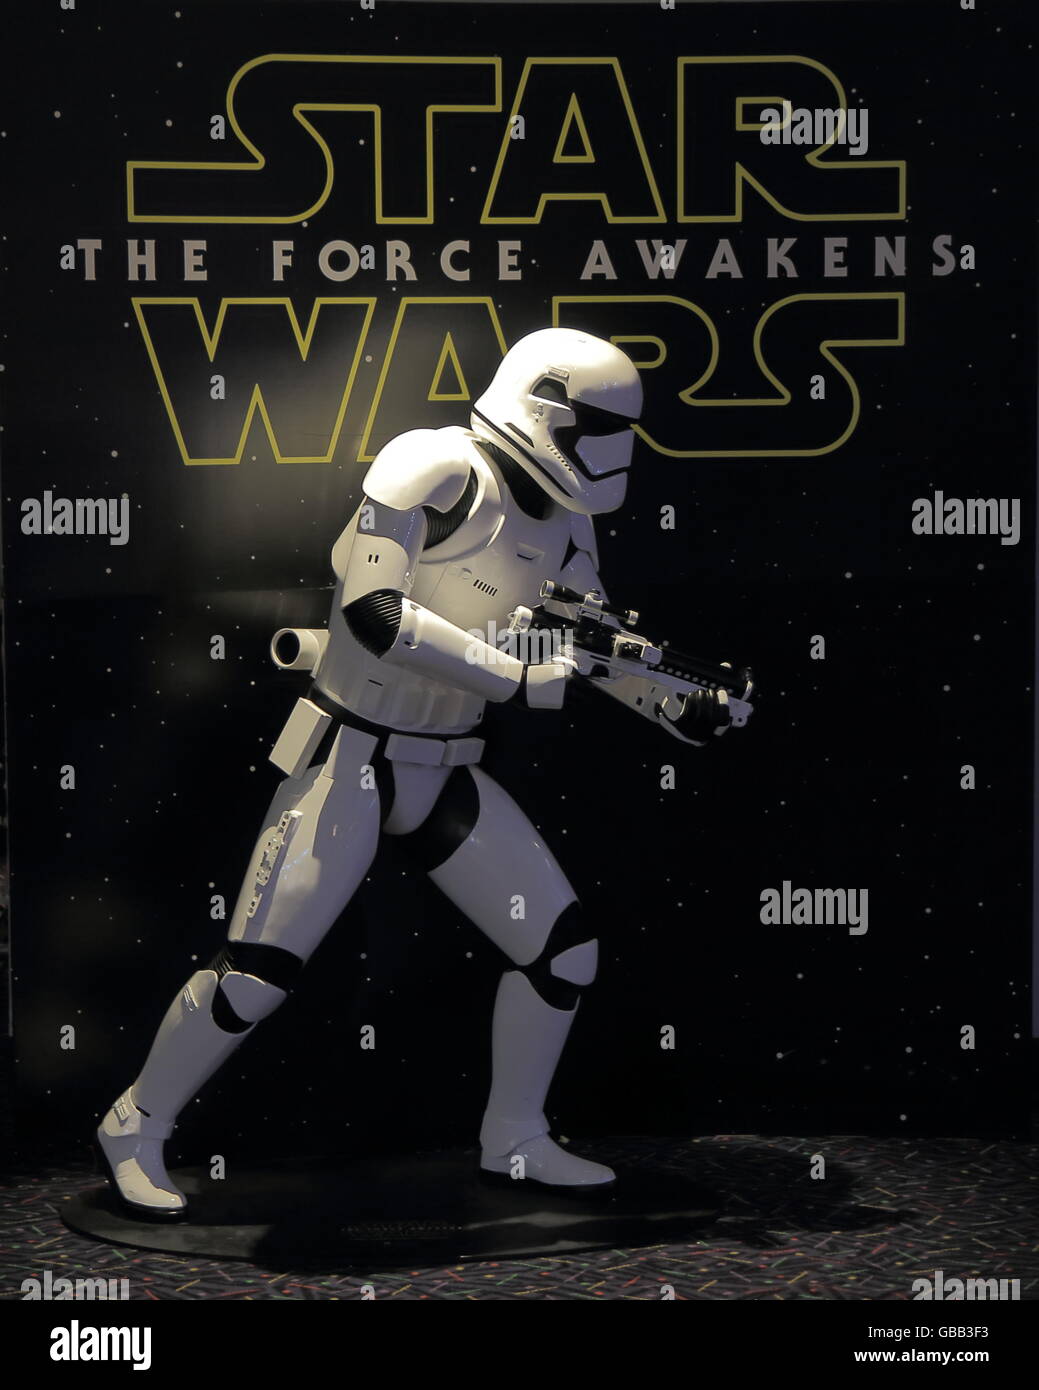 Star Wars au cinéma Hoyts film d'affichage. Banque D'Images